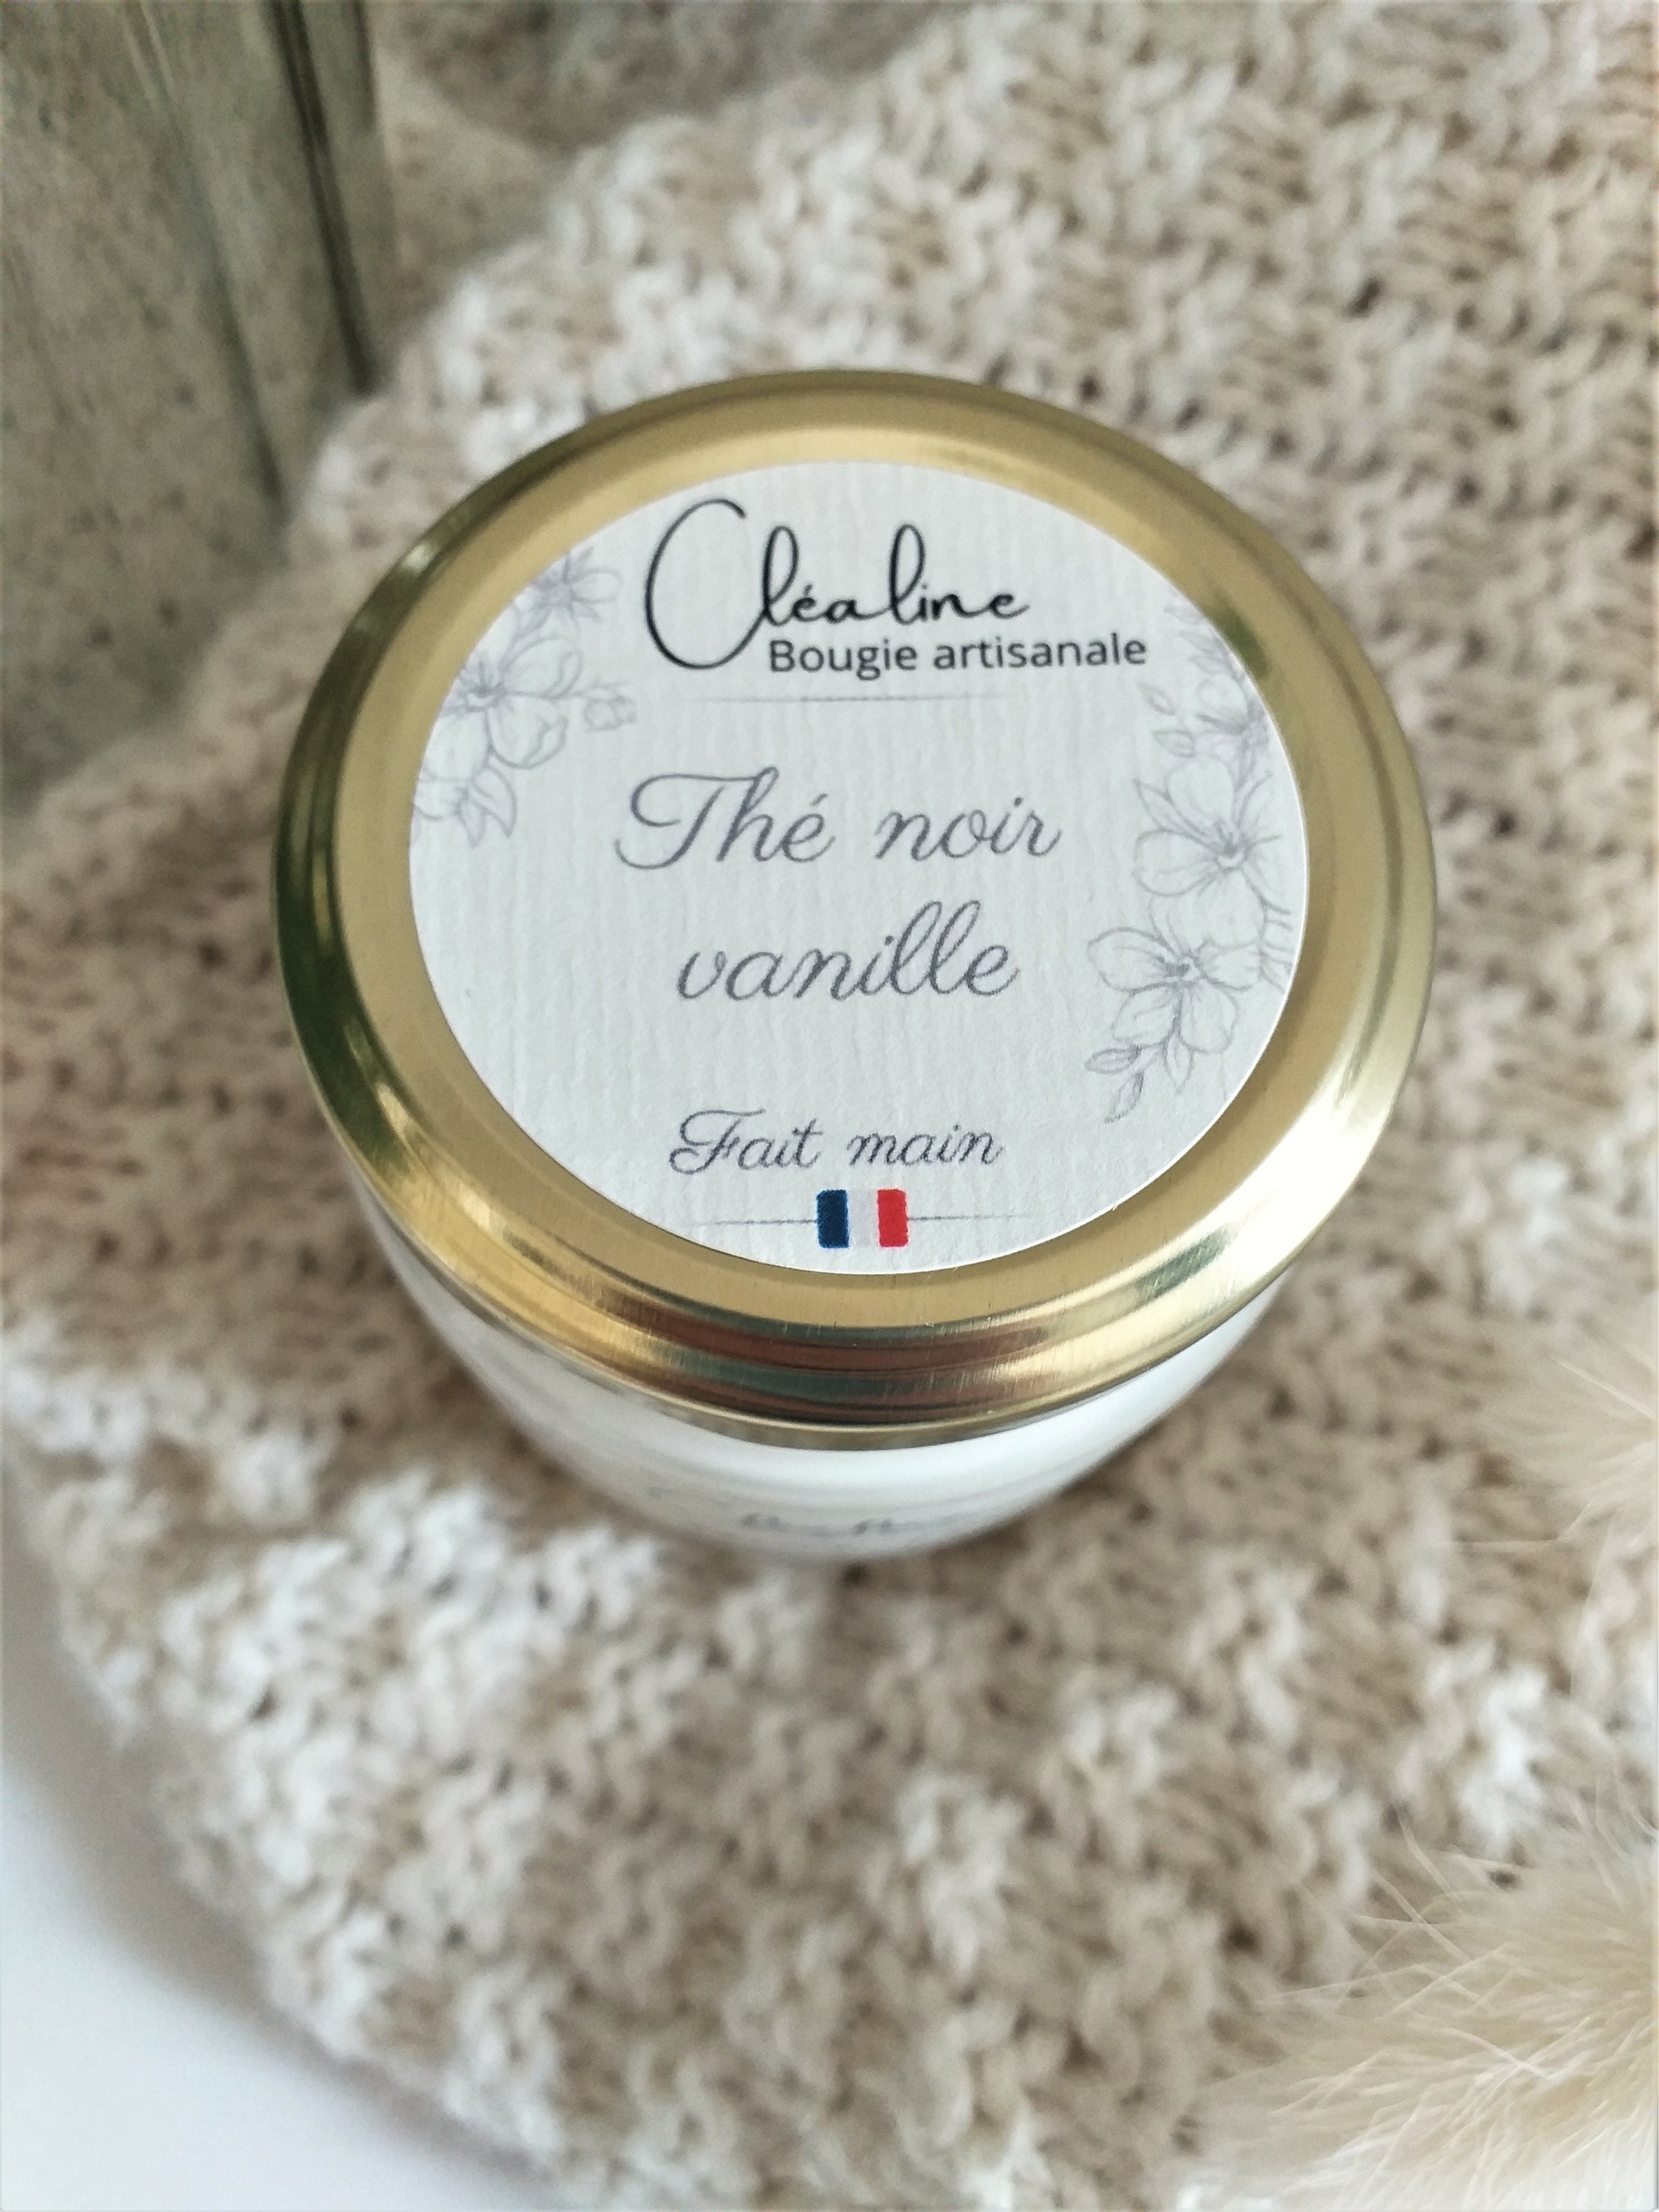 Bougie artisanale Thé noir vanille (2)